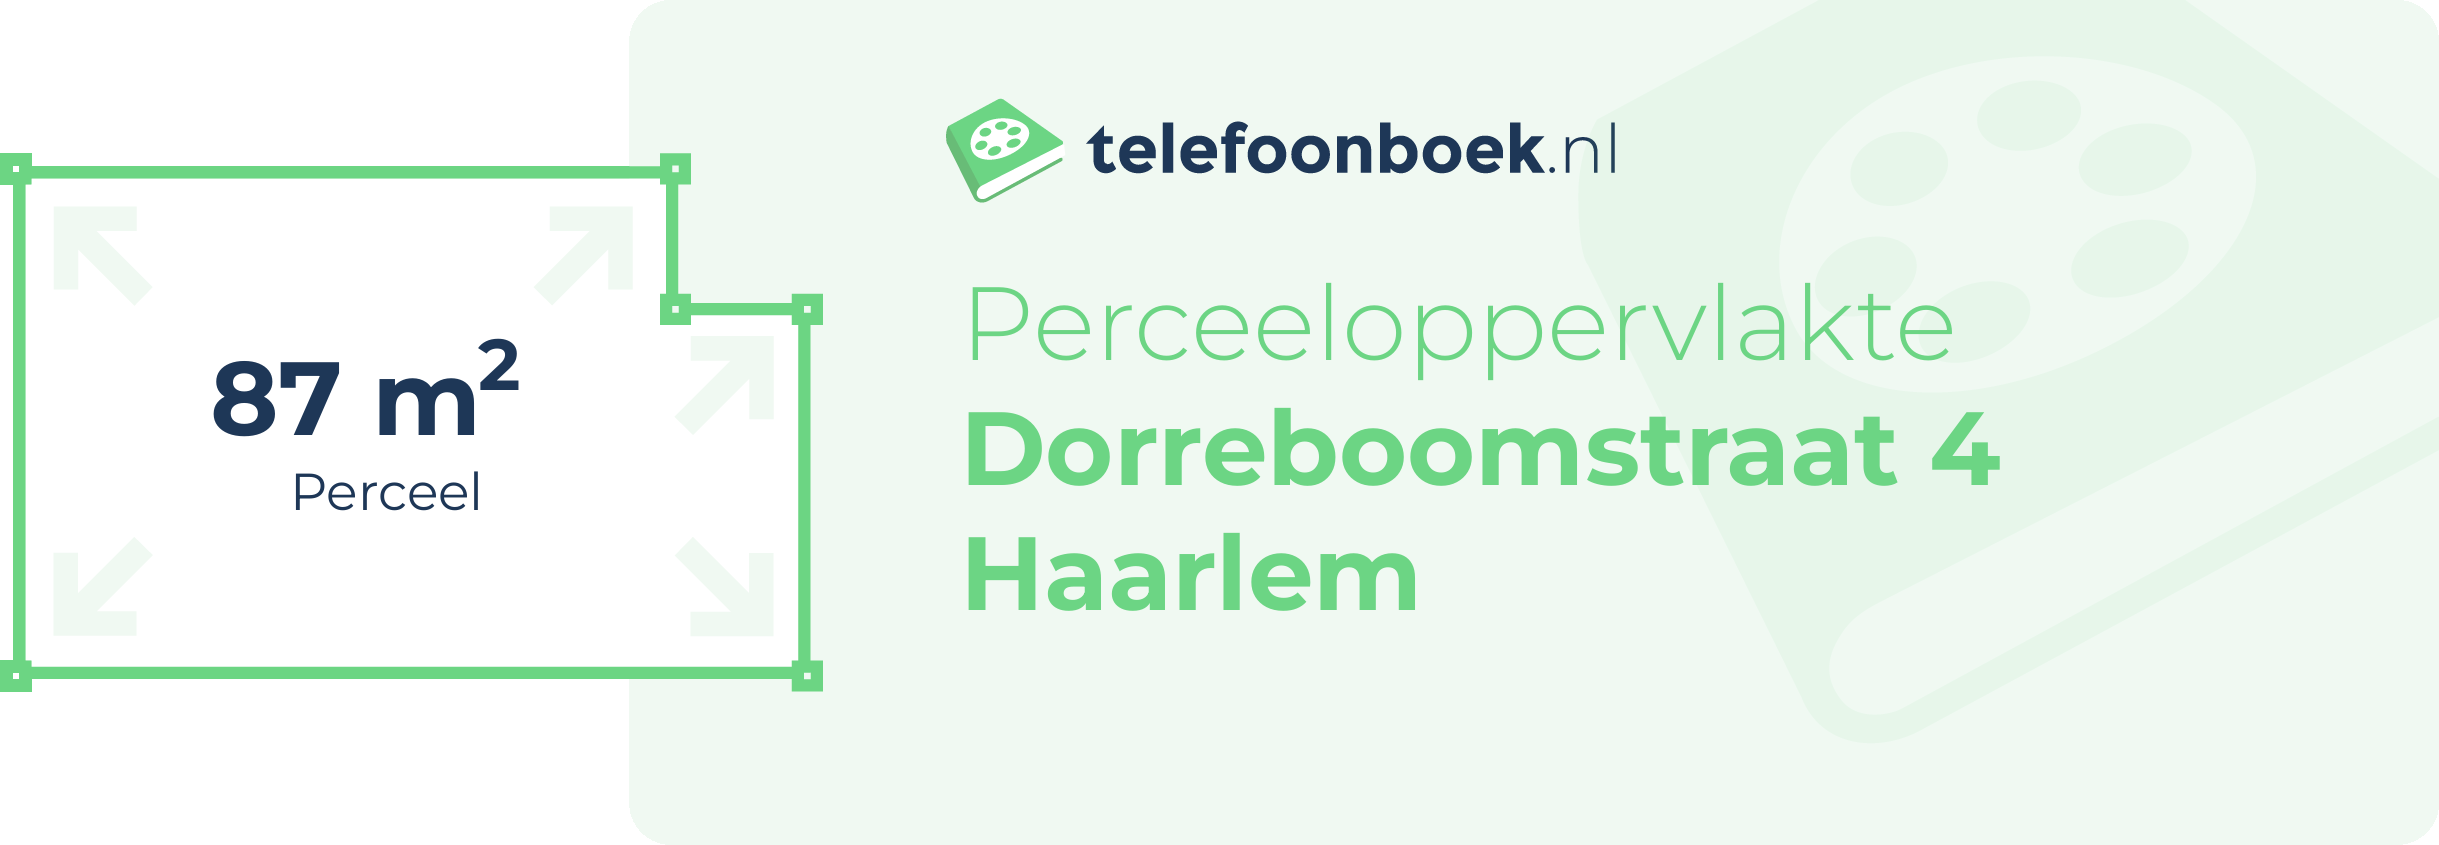 Perceeloppervlakte Dorreboomstraat 4 Haarlem